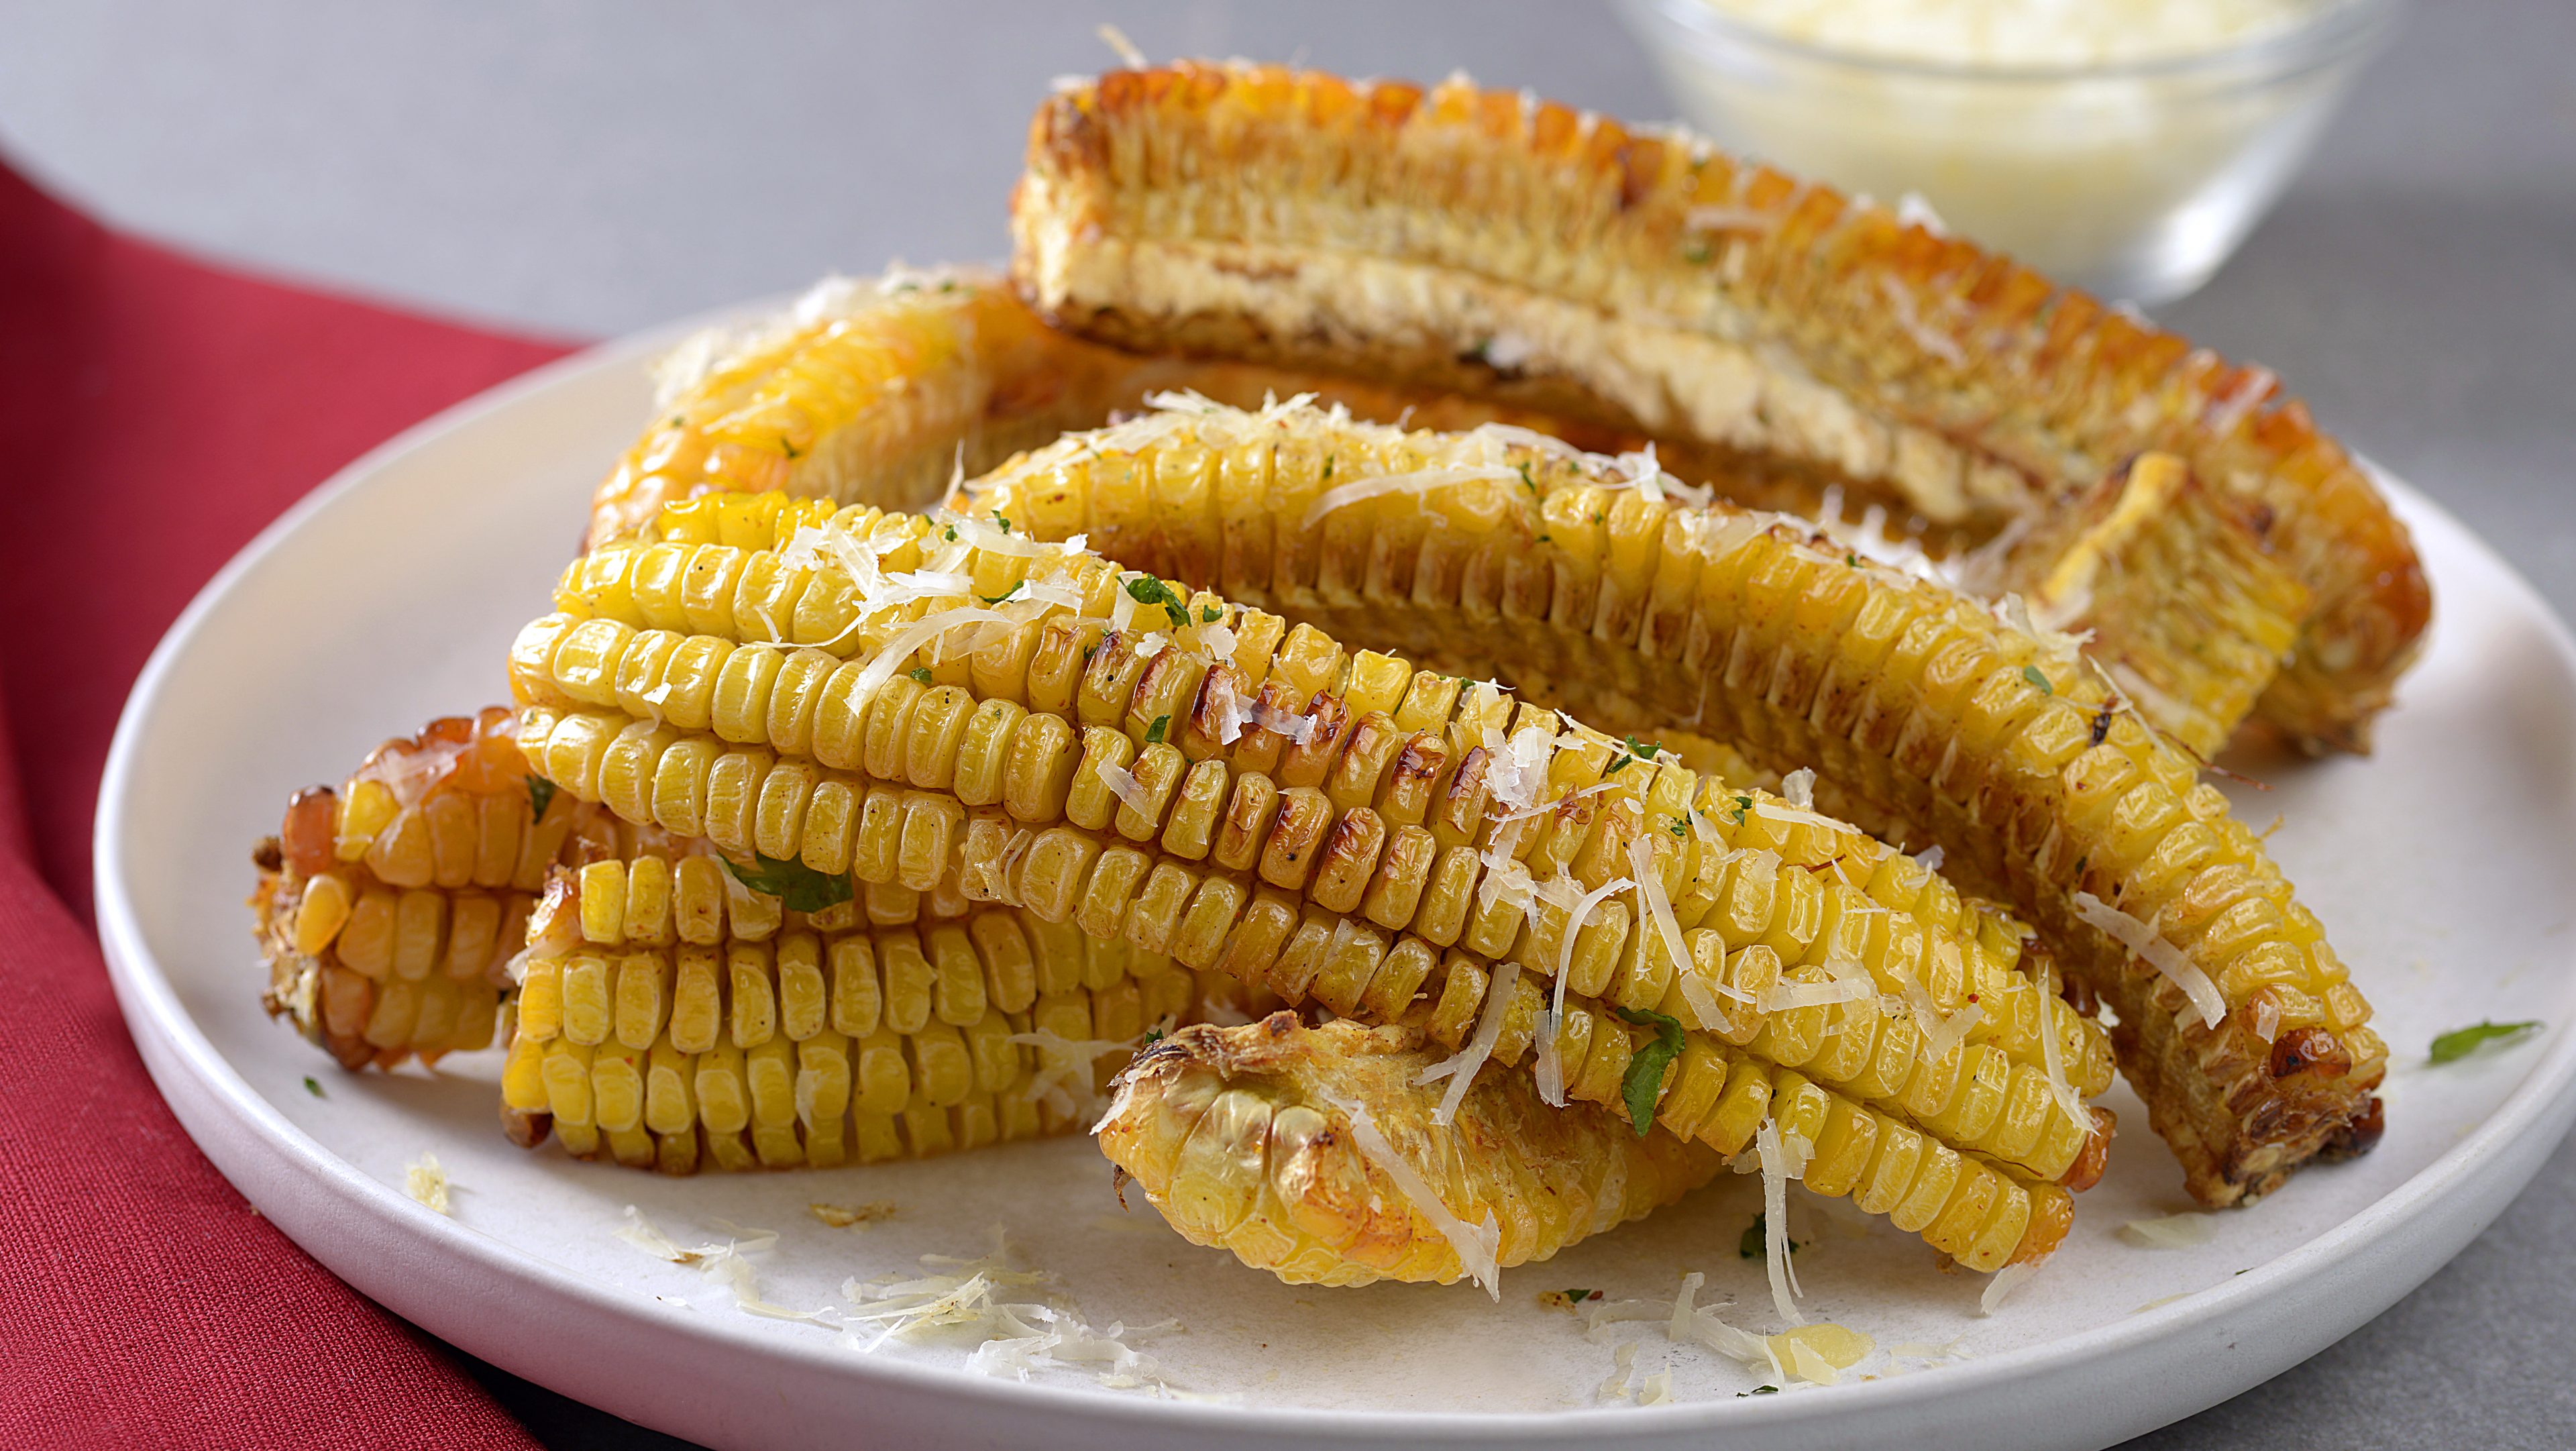 Corn ribs (“Costelinhas” de milho)